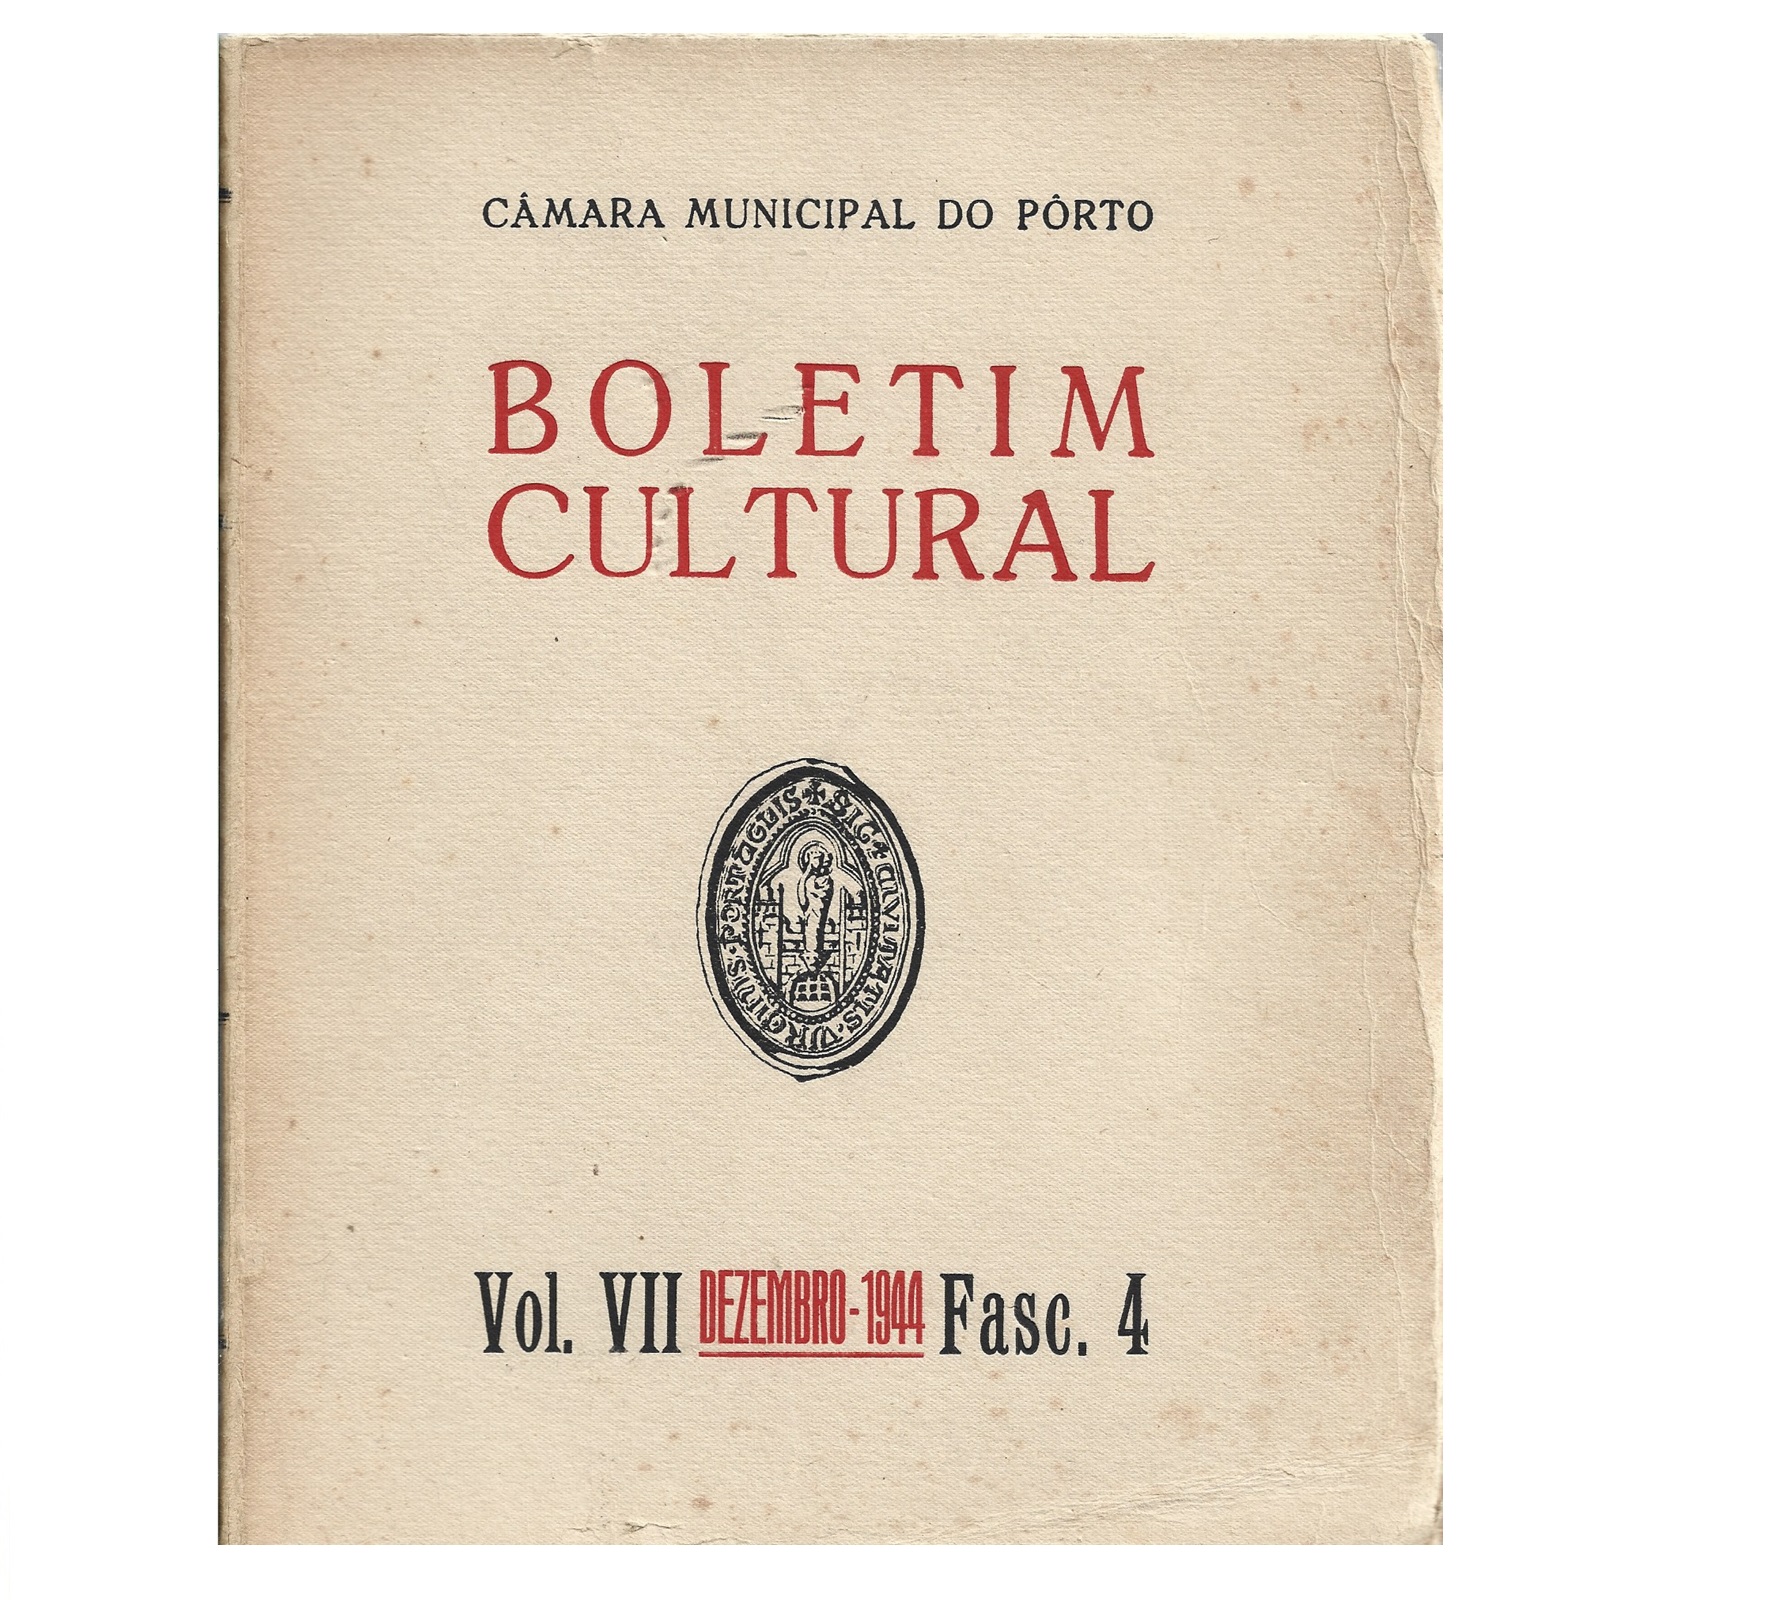 BOLETIM CULTURAL  DO PORTO VOLUME VII, FASCS. 4